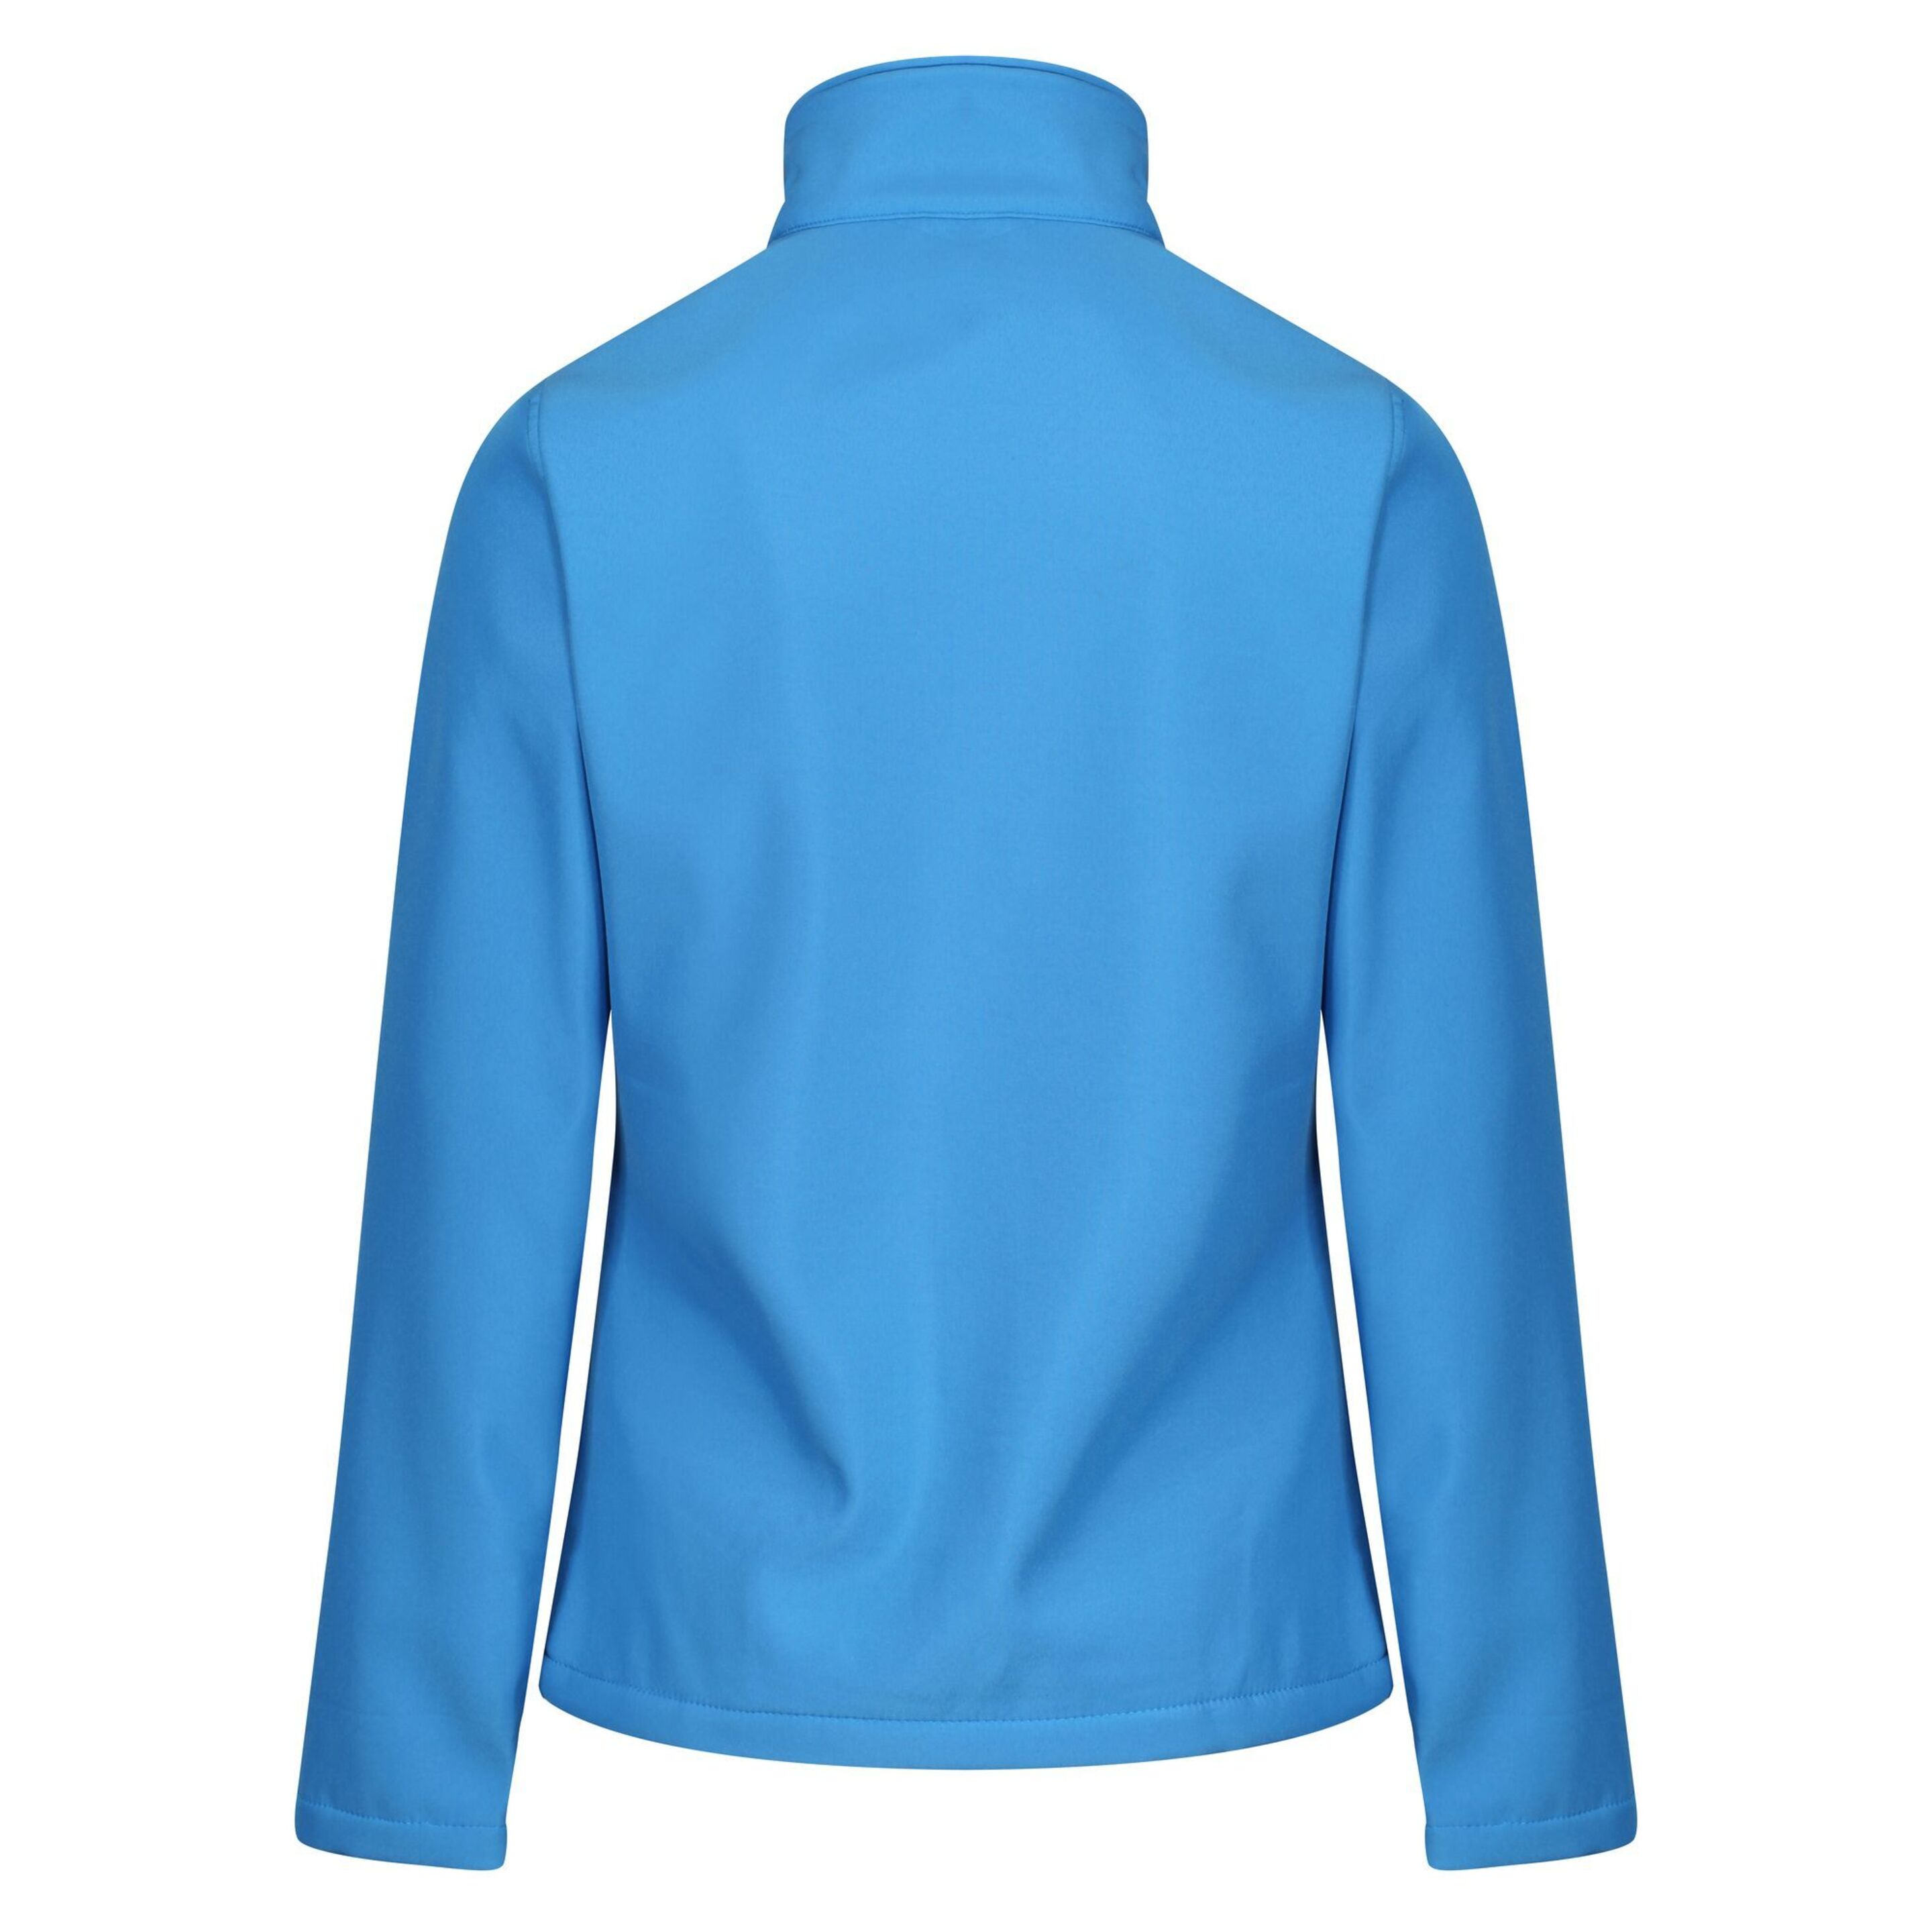 Destaque Mulheres/ladies Ablaze Printable Soft Shell Jacket Regatta (Azul Francês/navy)